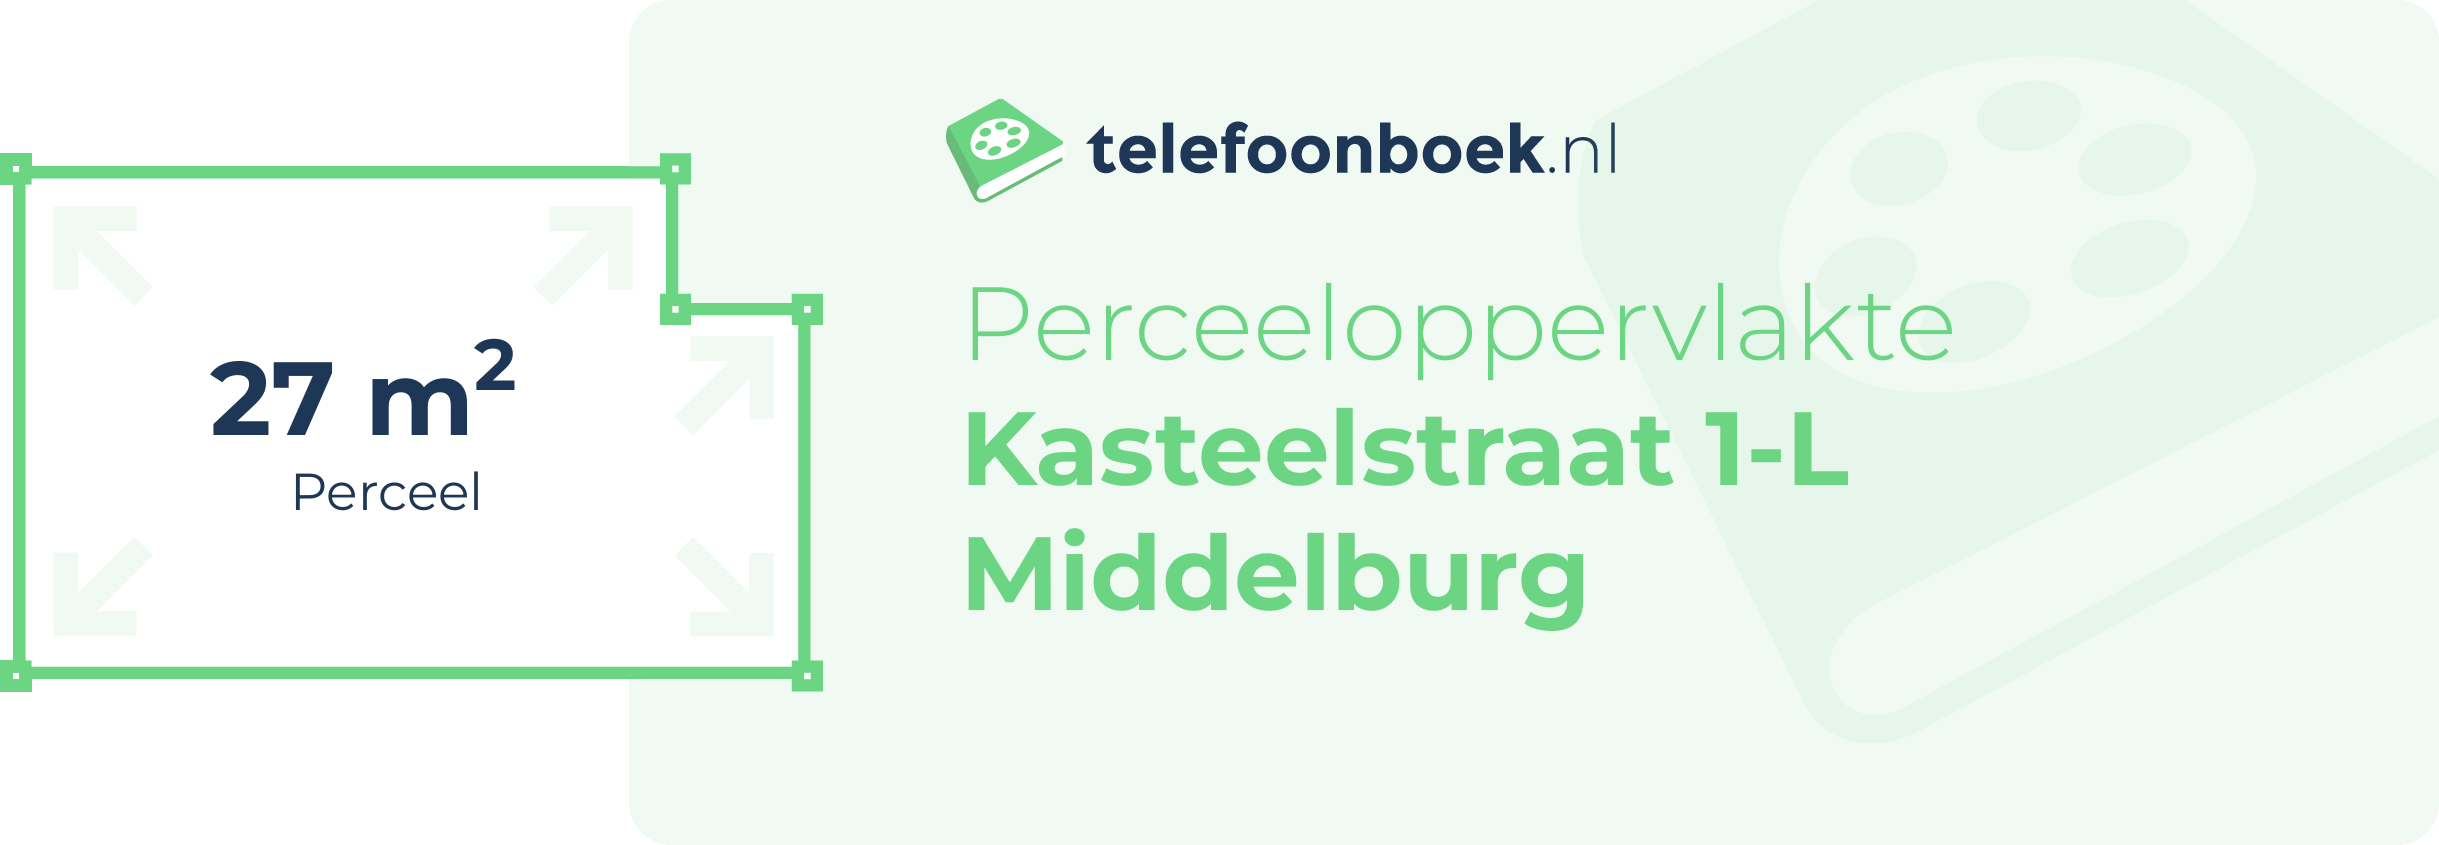 Perceeloppervlakte Kasteelstraat 1-L Middelburg